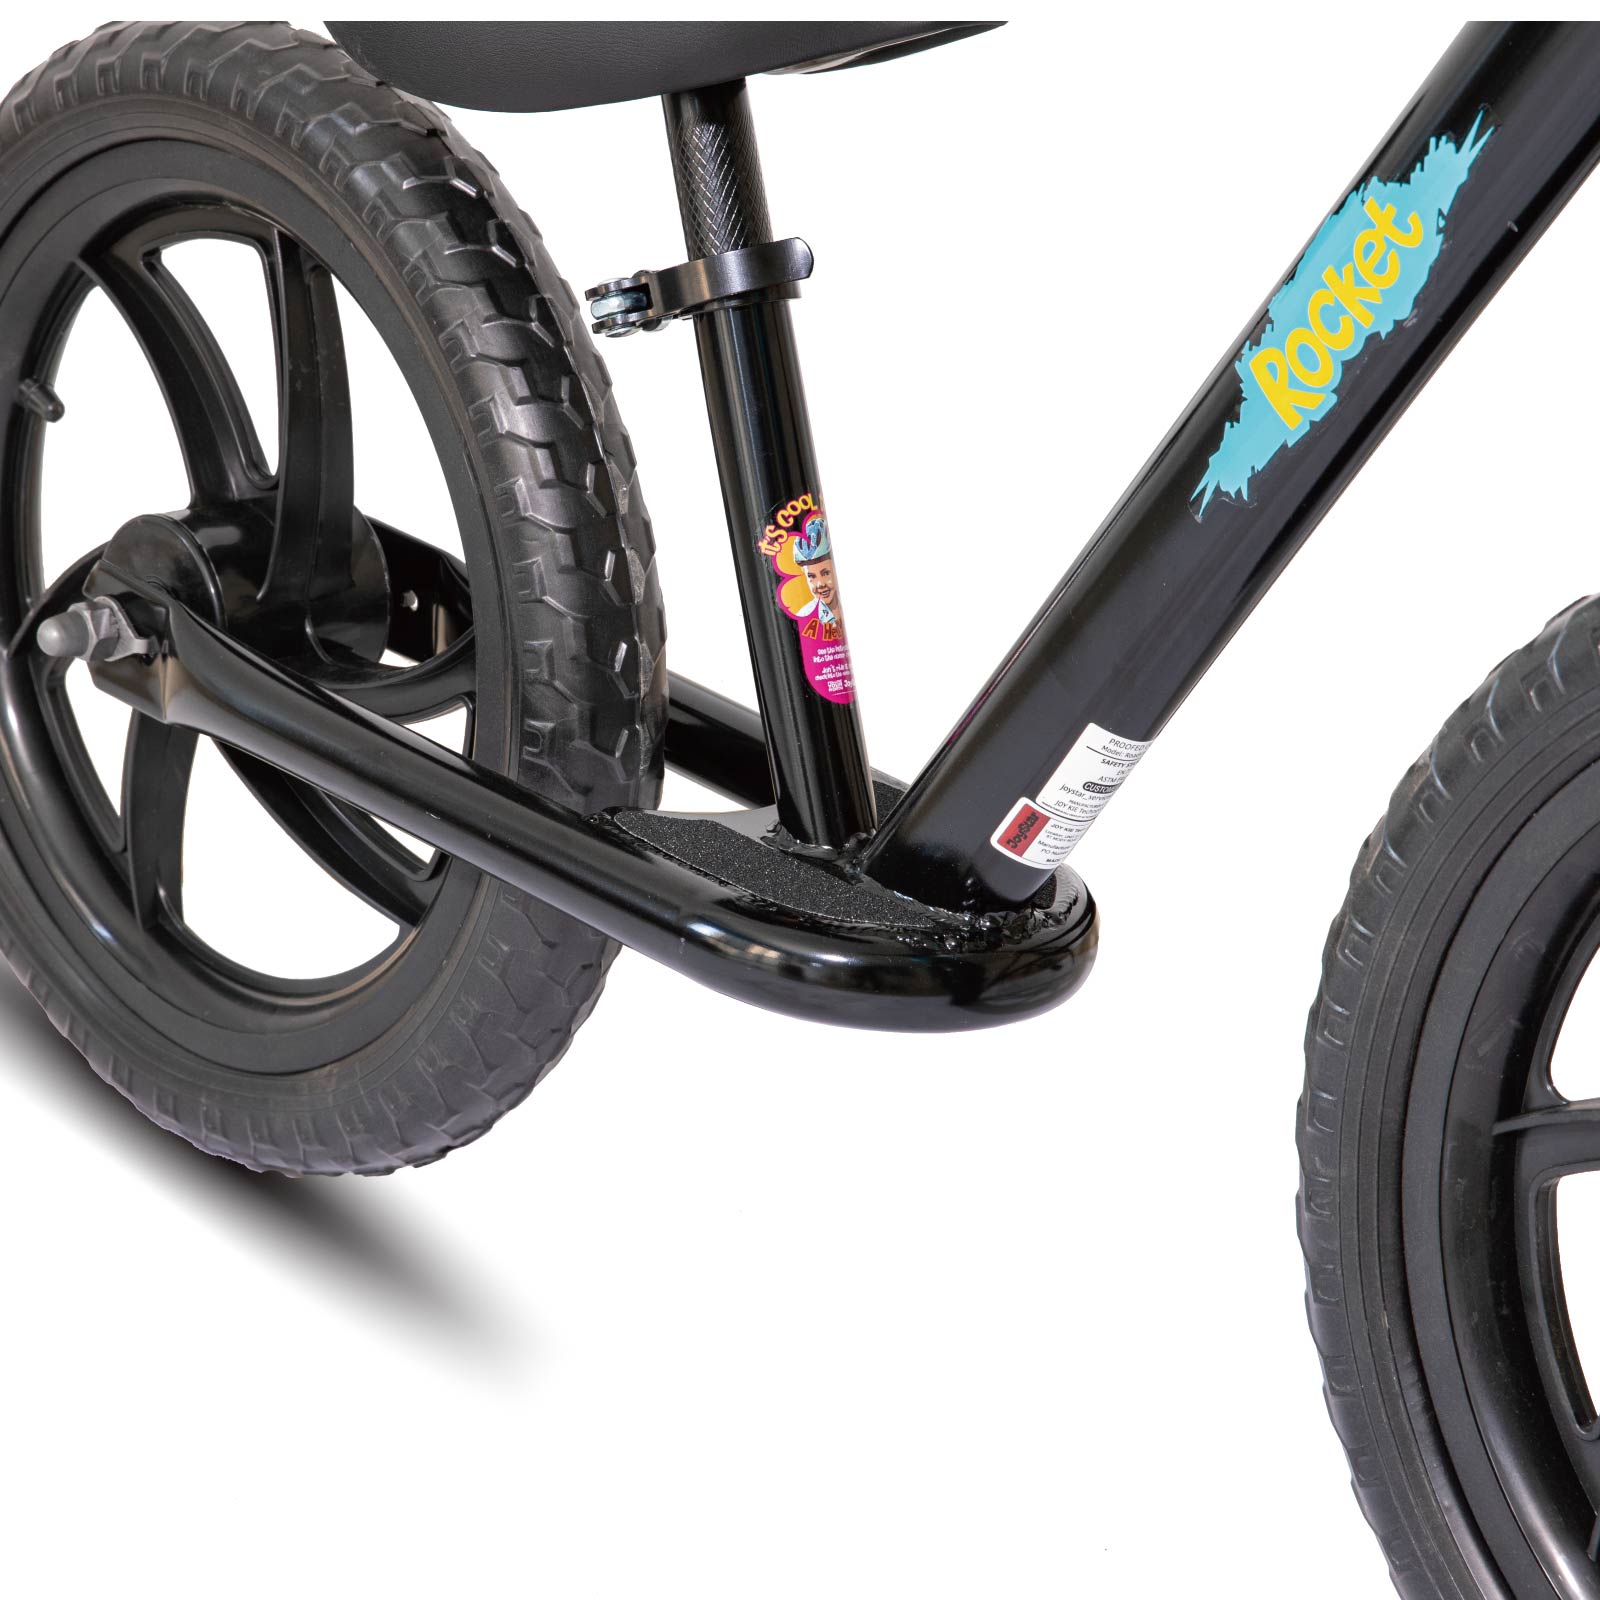 JOYSTAR Rocket 12/14 Kids Balance Bike – JOYSTARBIKE